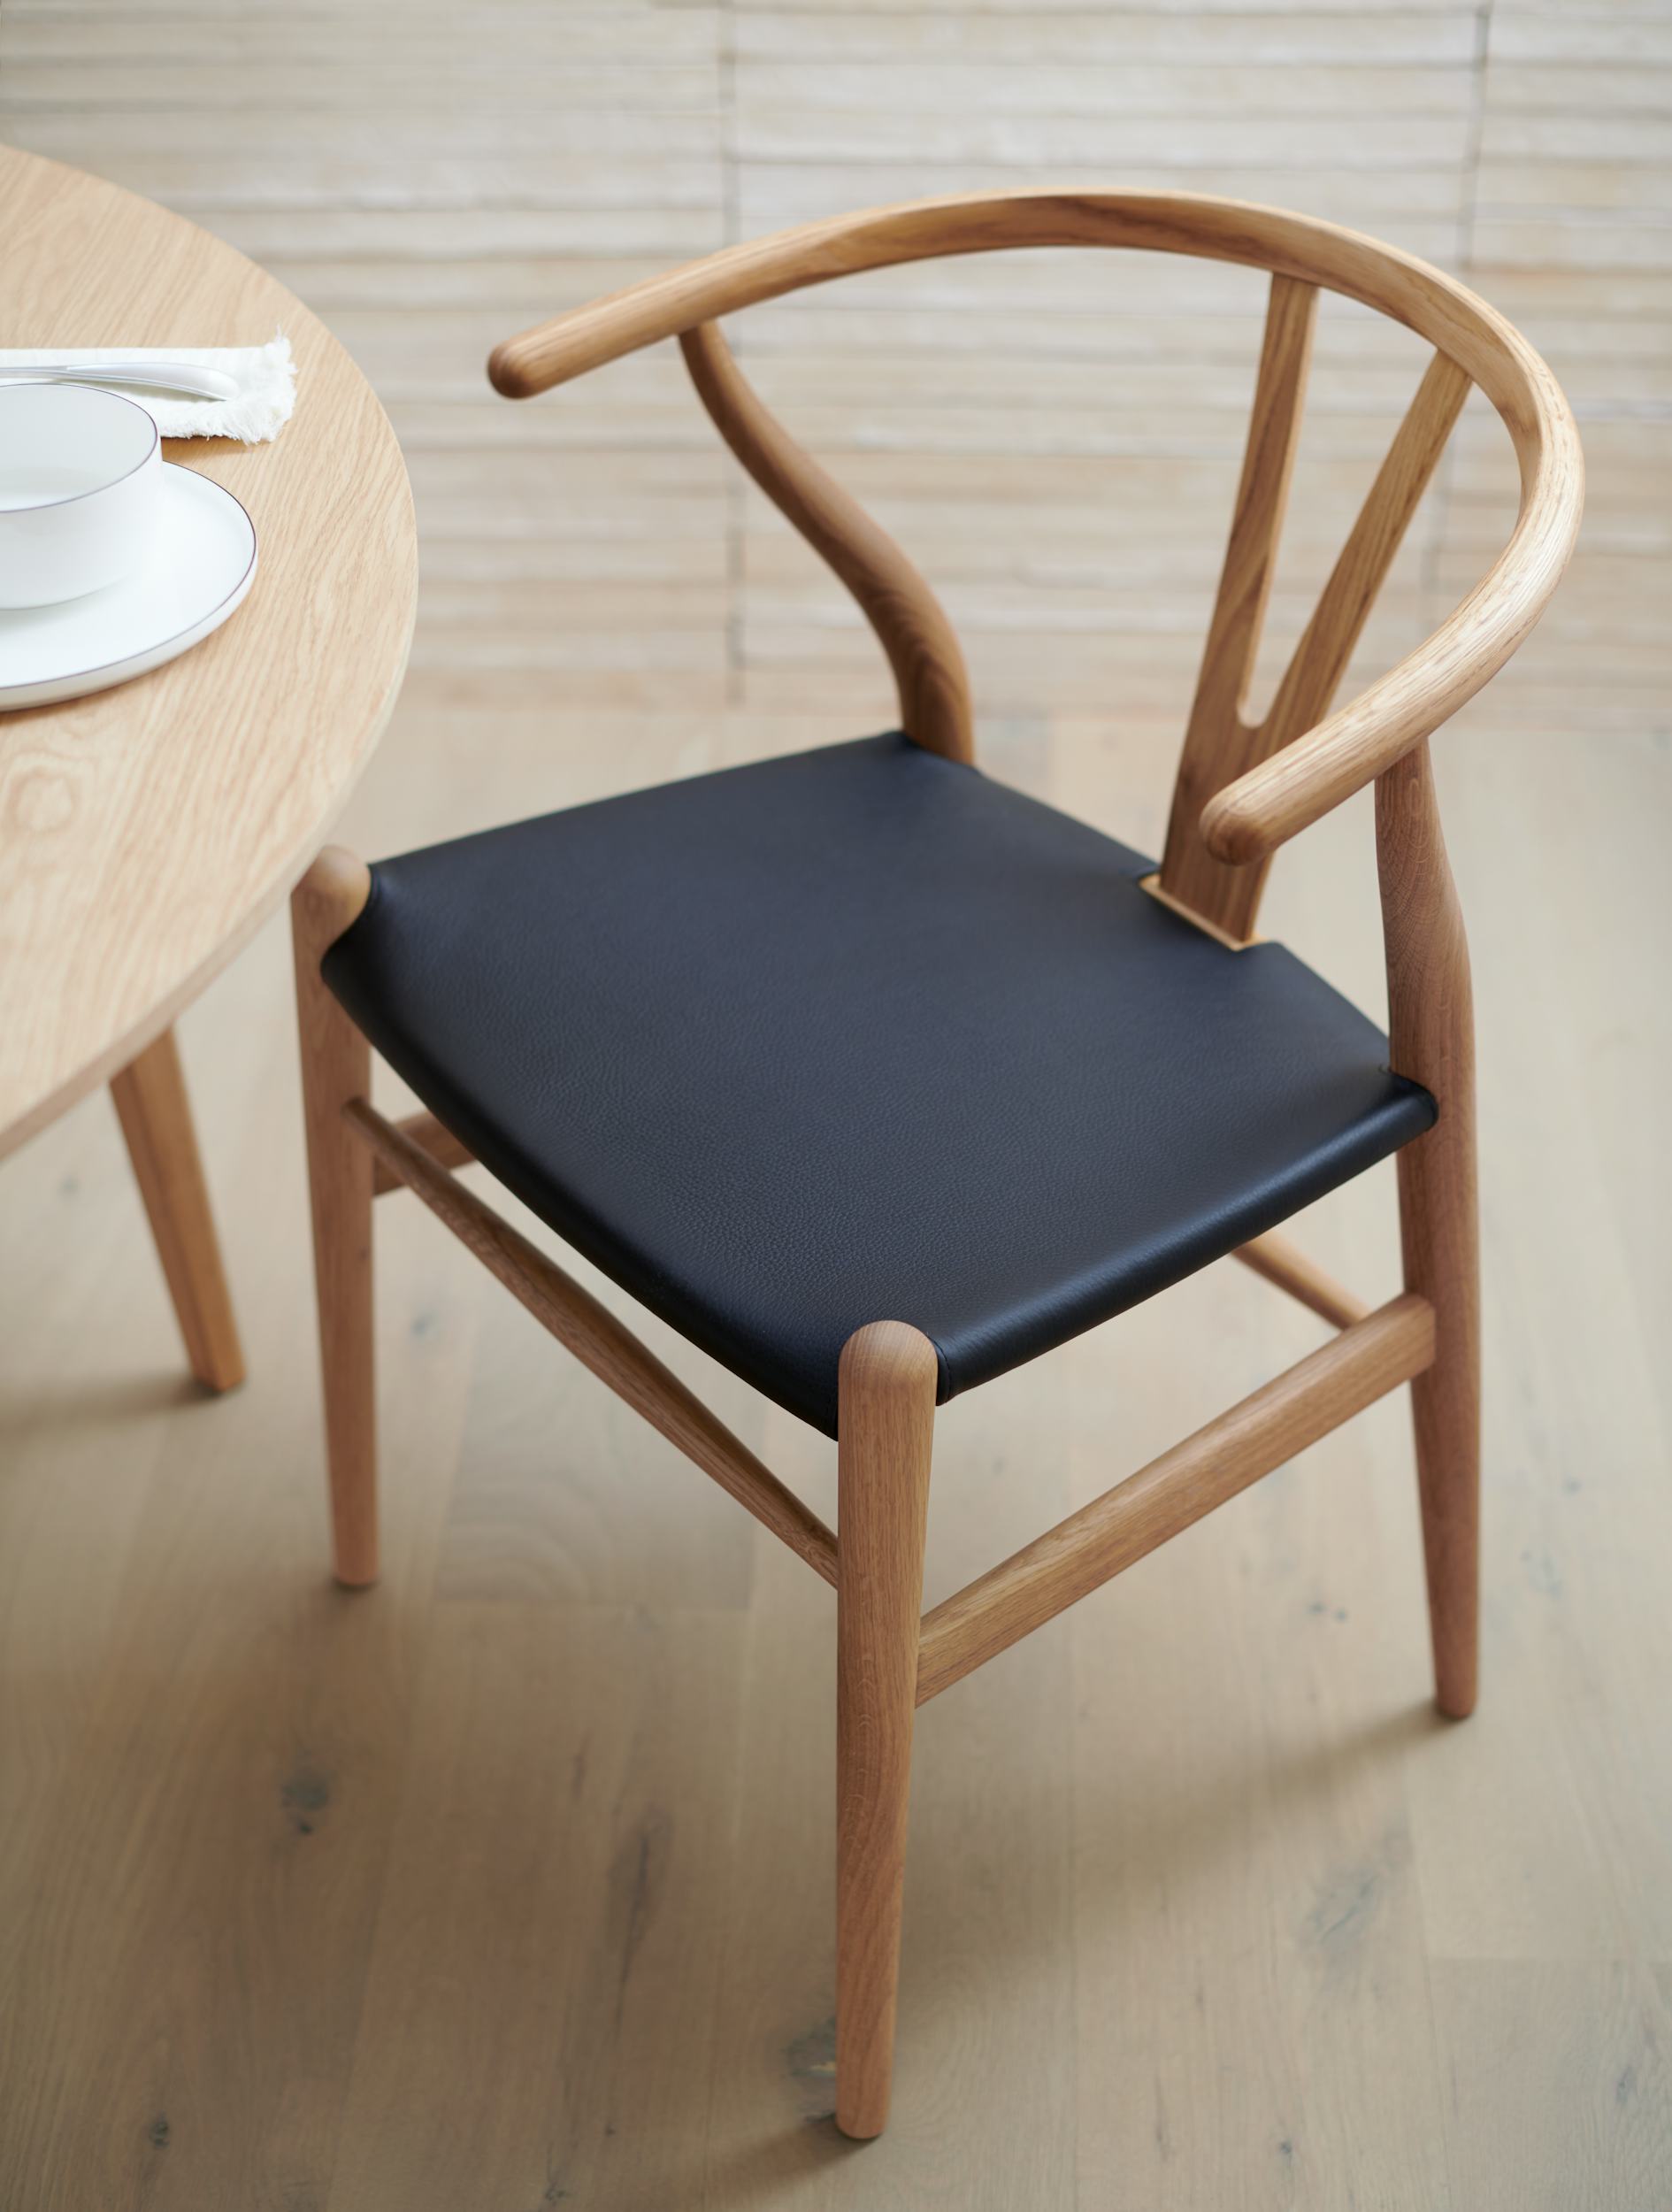 Seat cushion for wishbone chair -PU leather